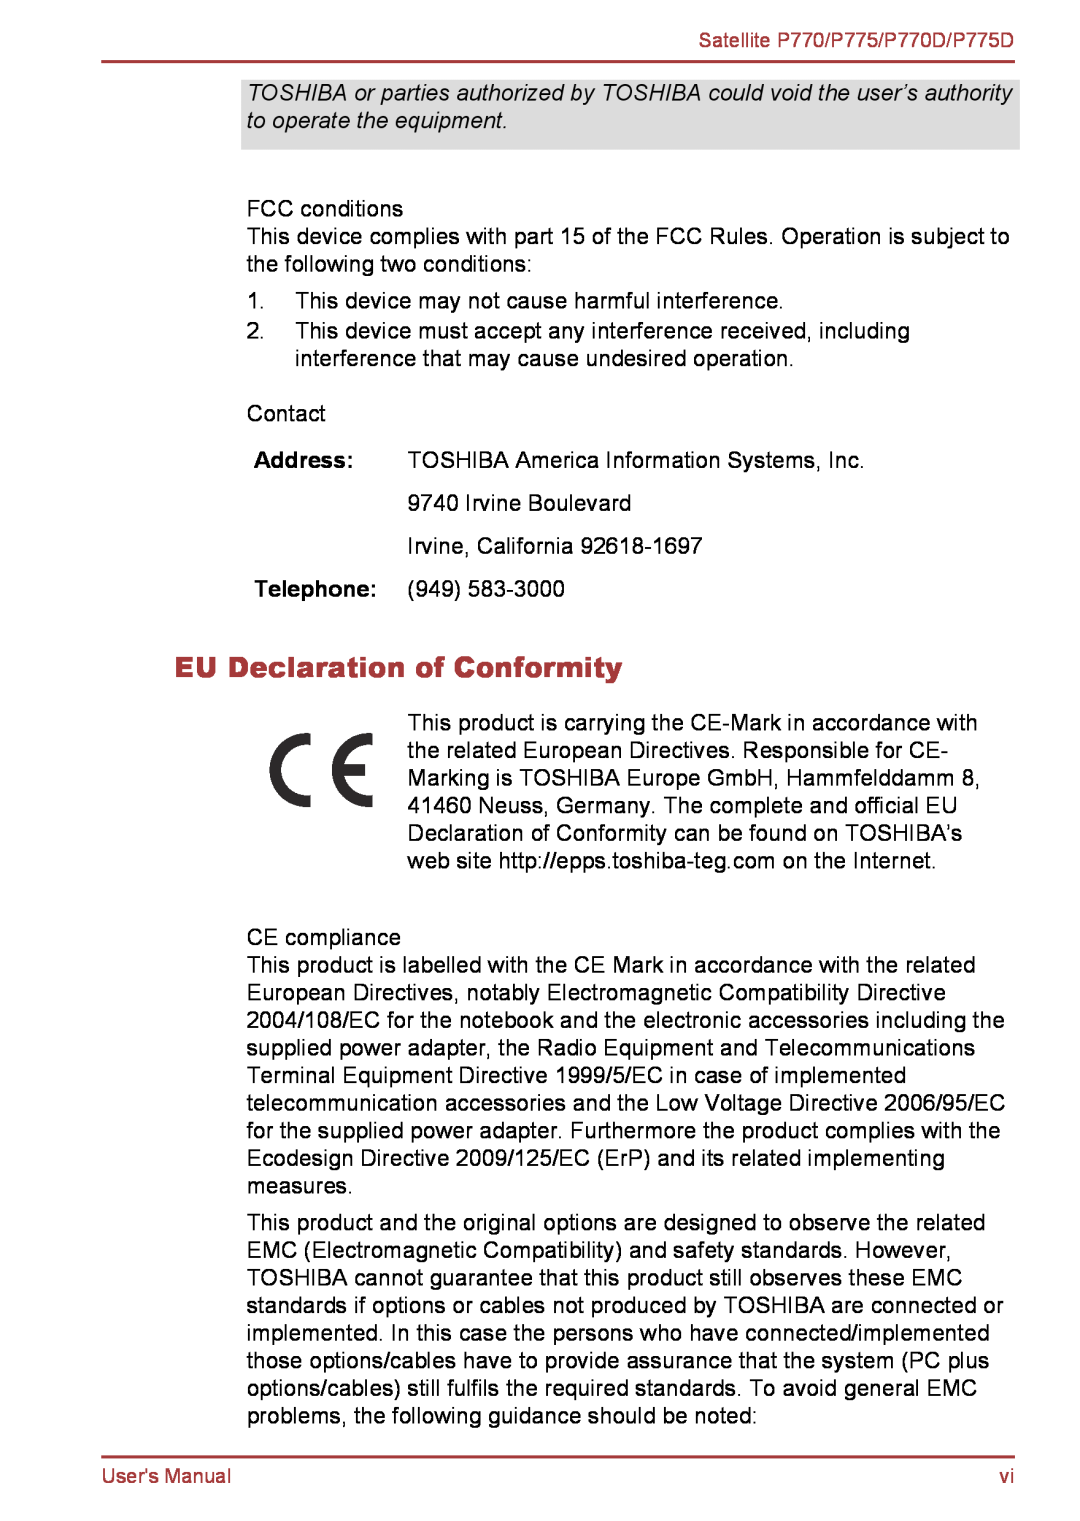 Toshiba P770 user manual EU Declaration of Conformity 